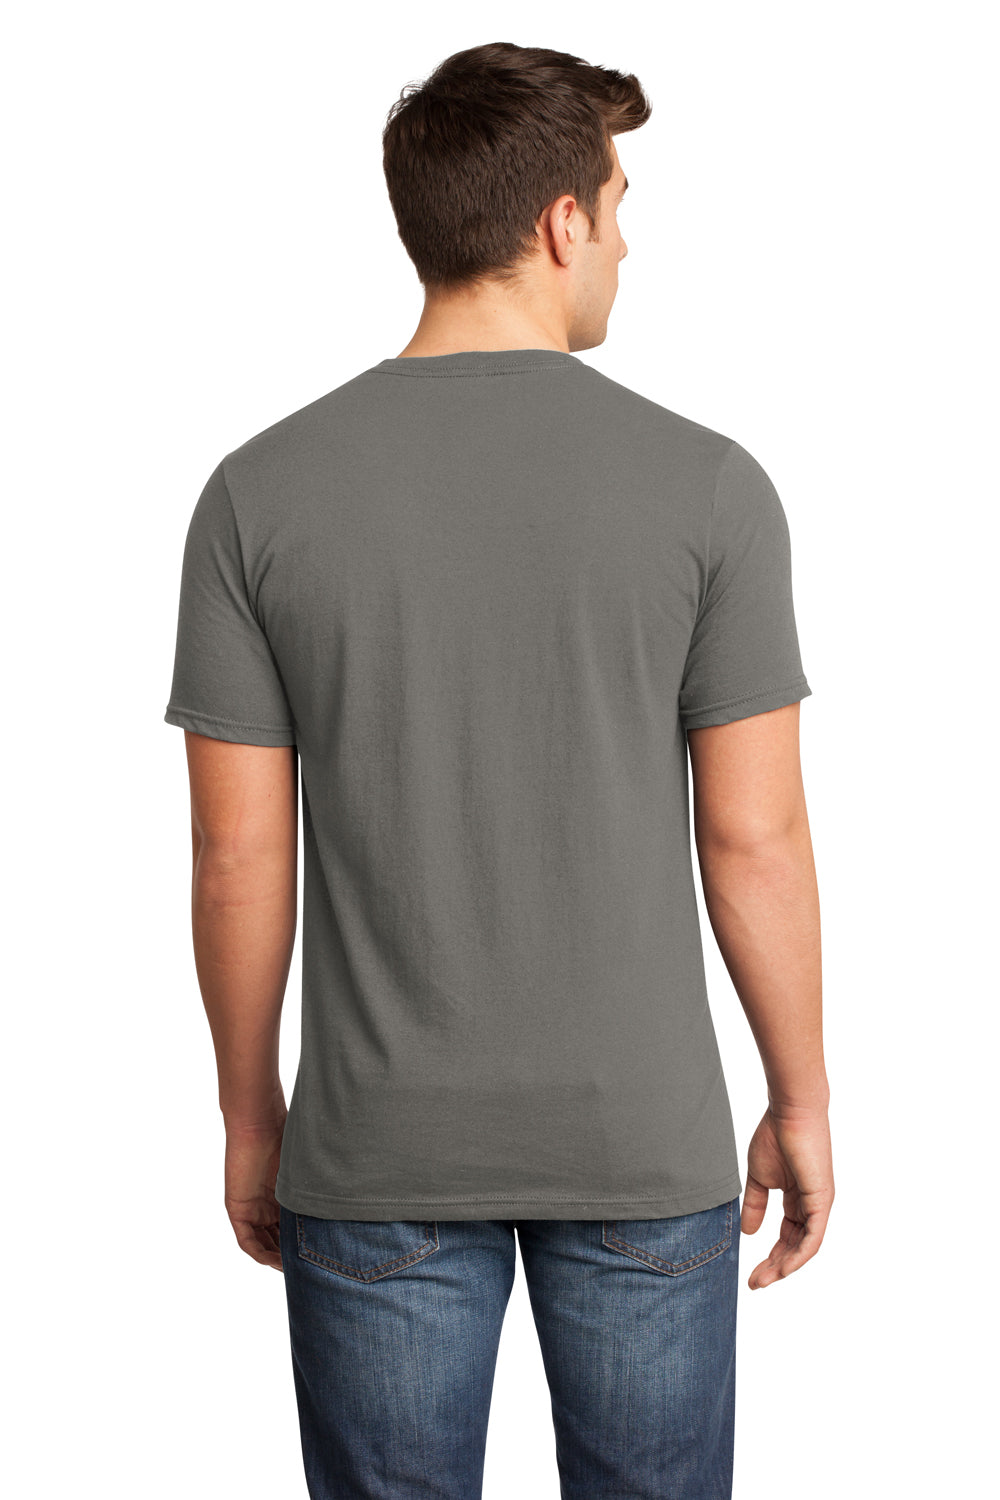 District DT6500 Mens Very Important Short Sleeve V-Neck T-Shirt Grey Back